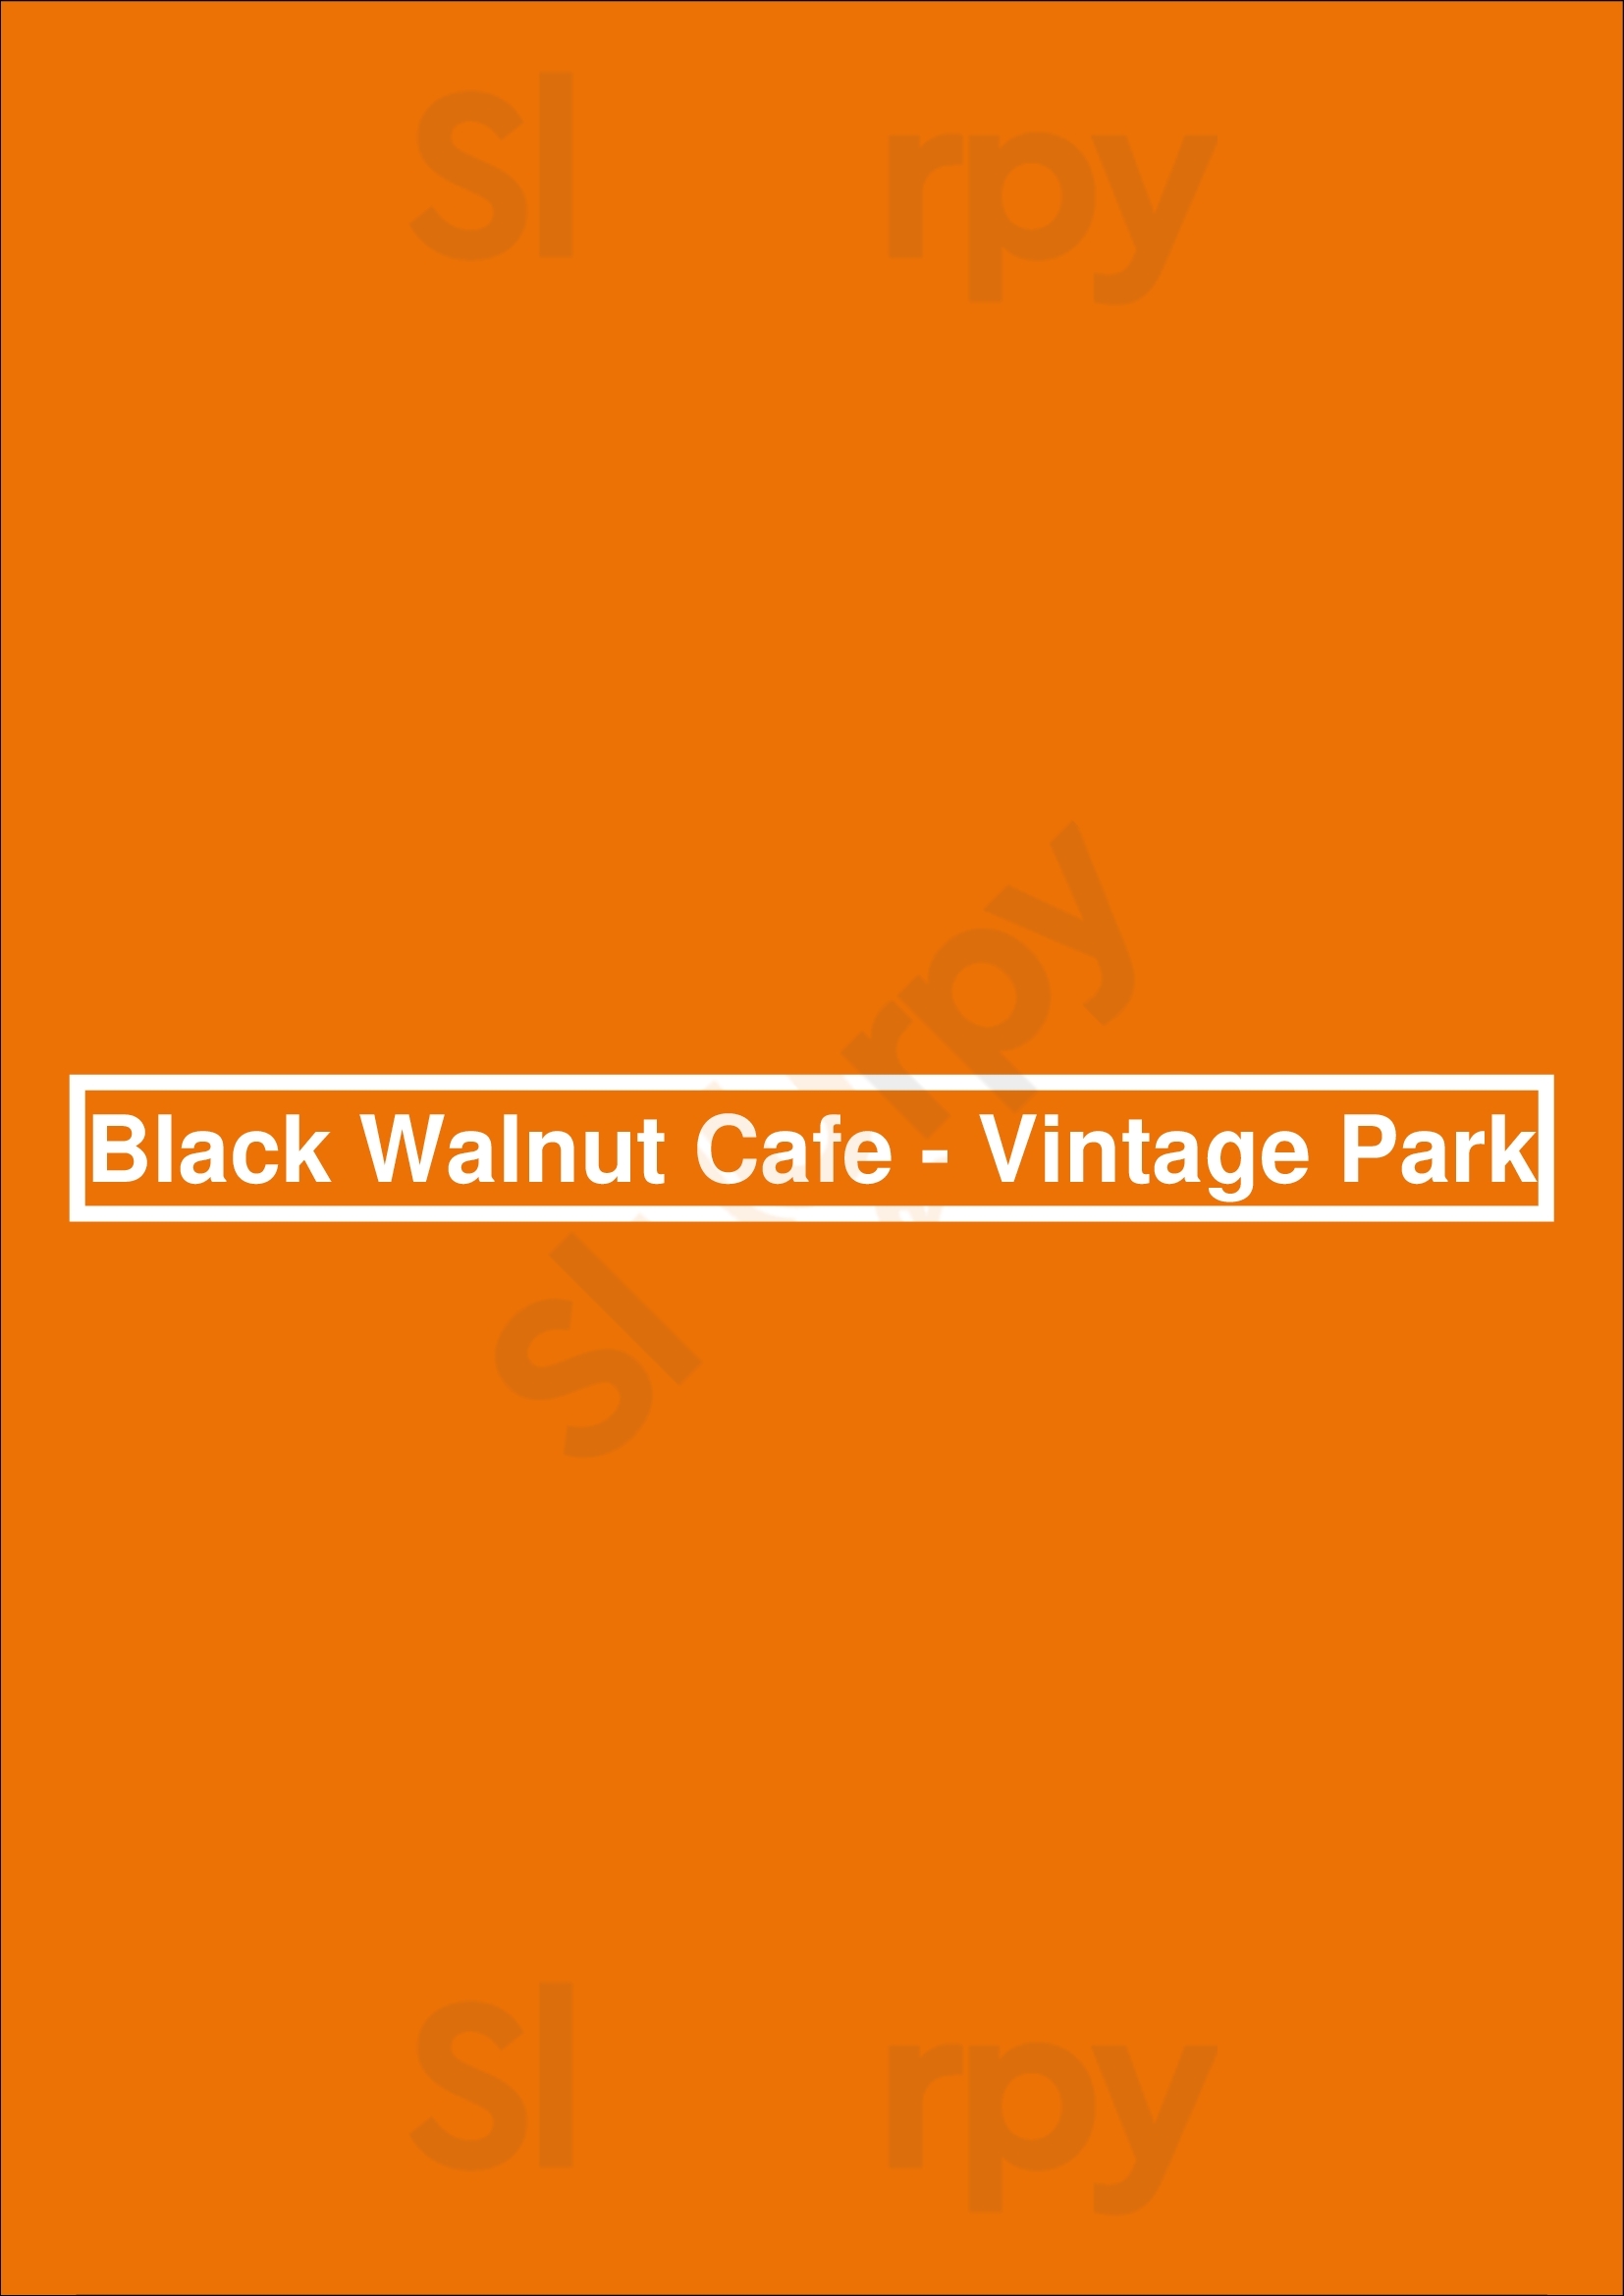 Black Walnut Cafe - Vintage Park Houston Menu - 1